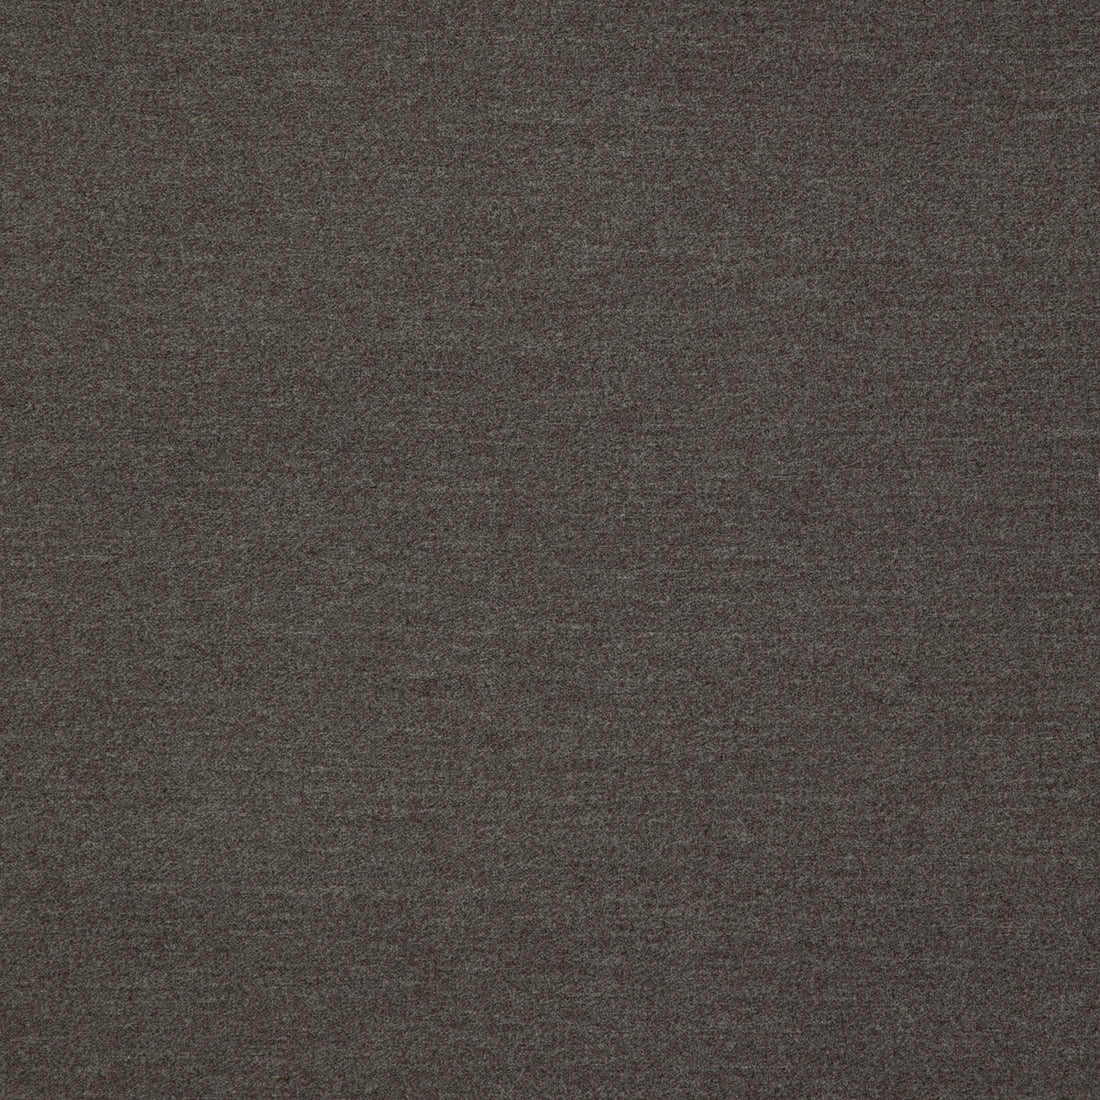 Kravet Smart fabric in 37000-21 color - pattern 37000.21.0 - by Kravet Smart in the Performance Kravetarmor collection